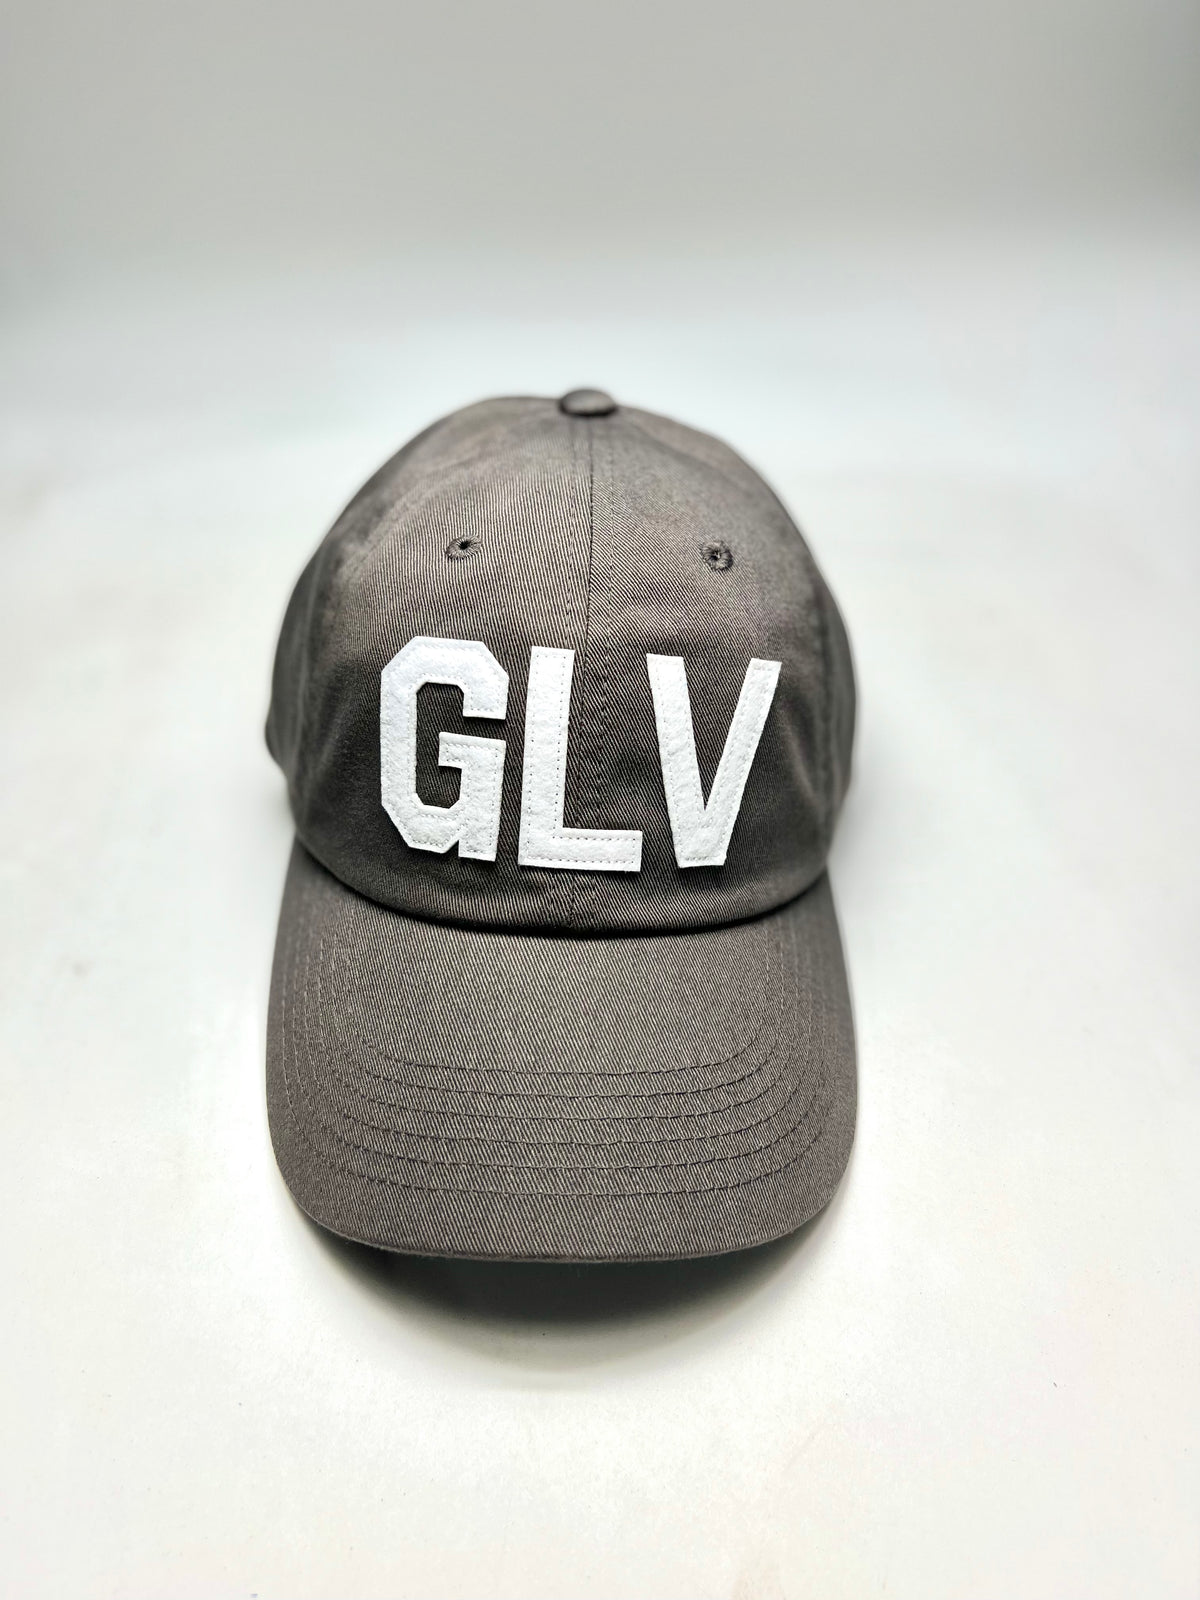 GLV - Galveston, TX